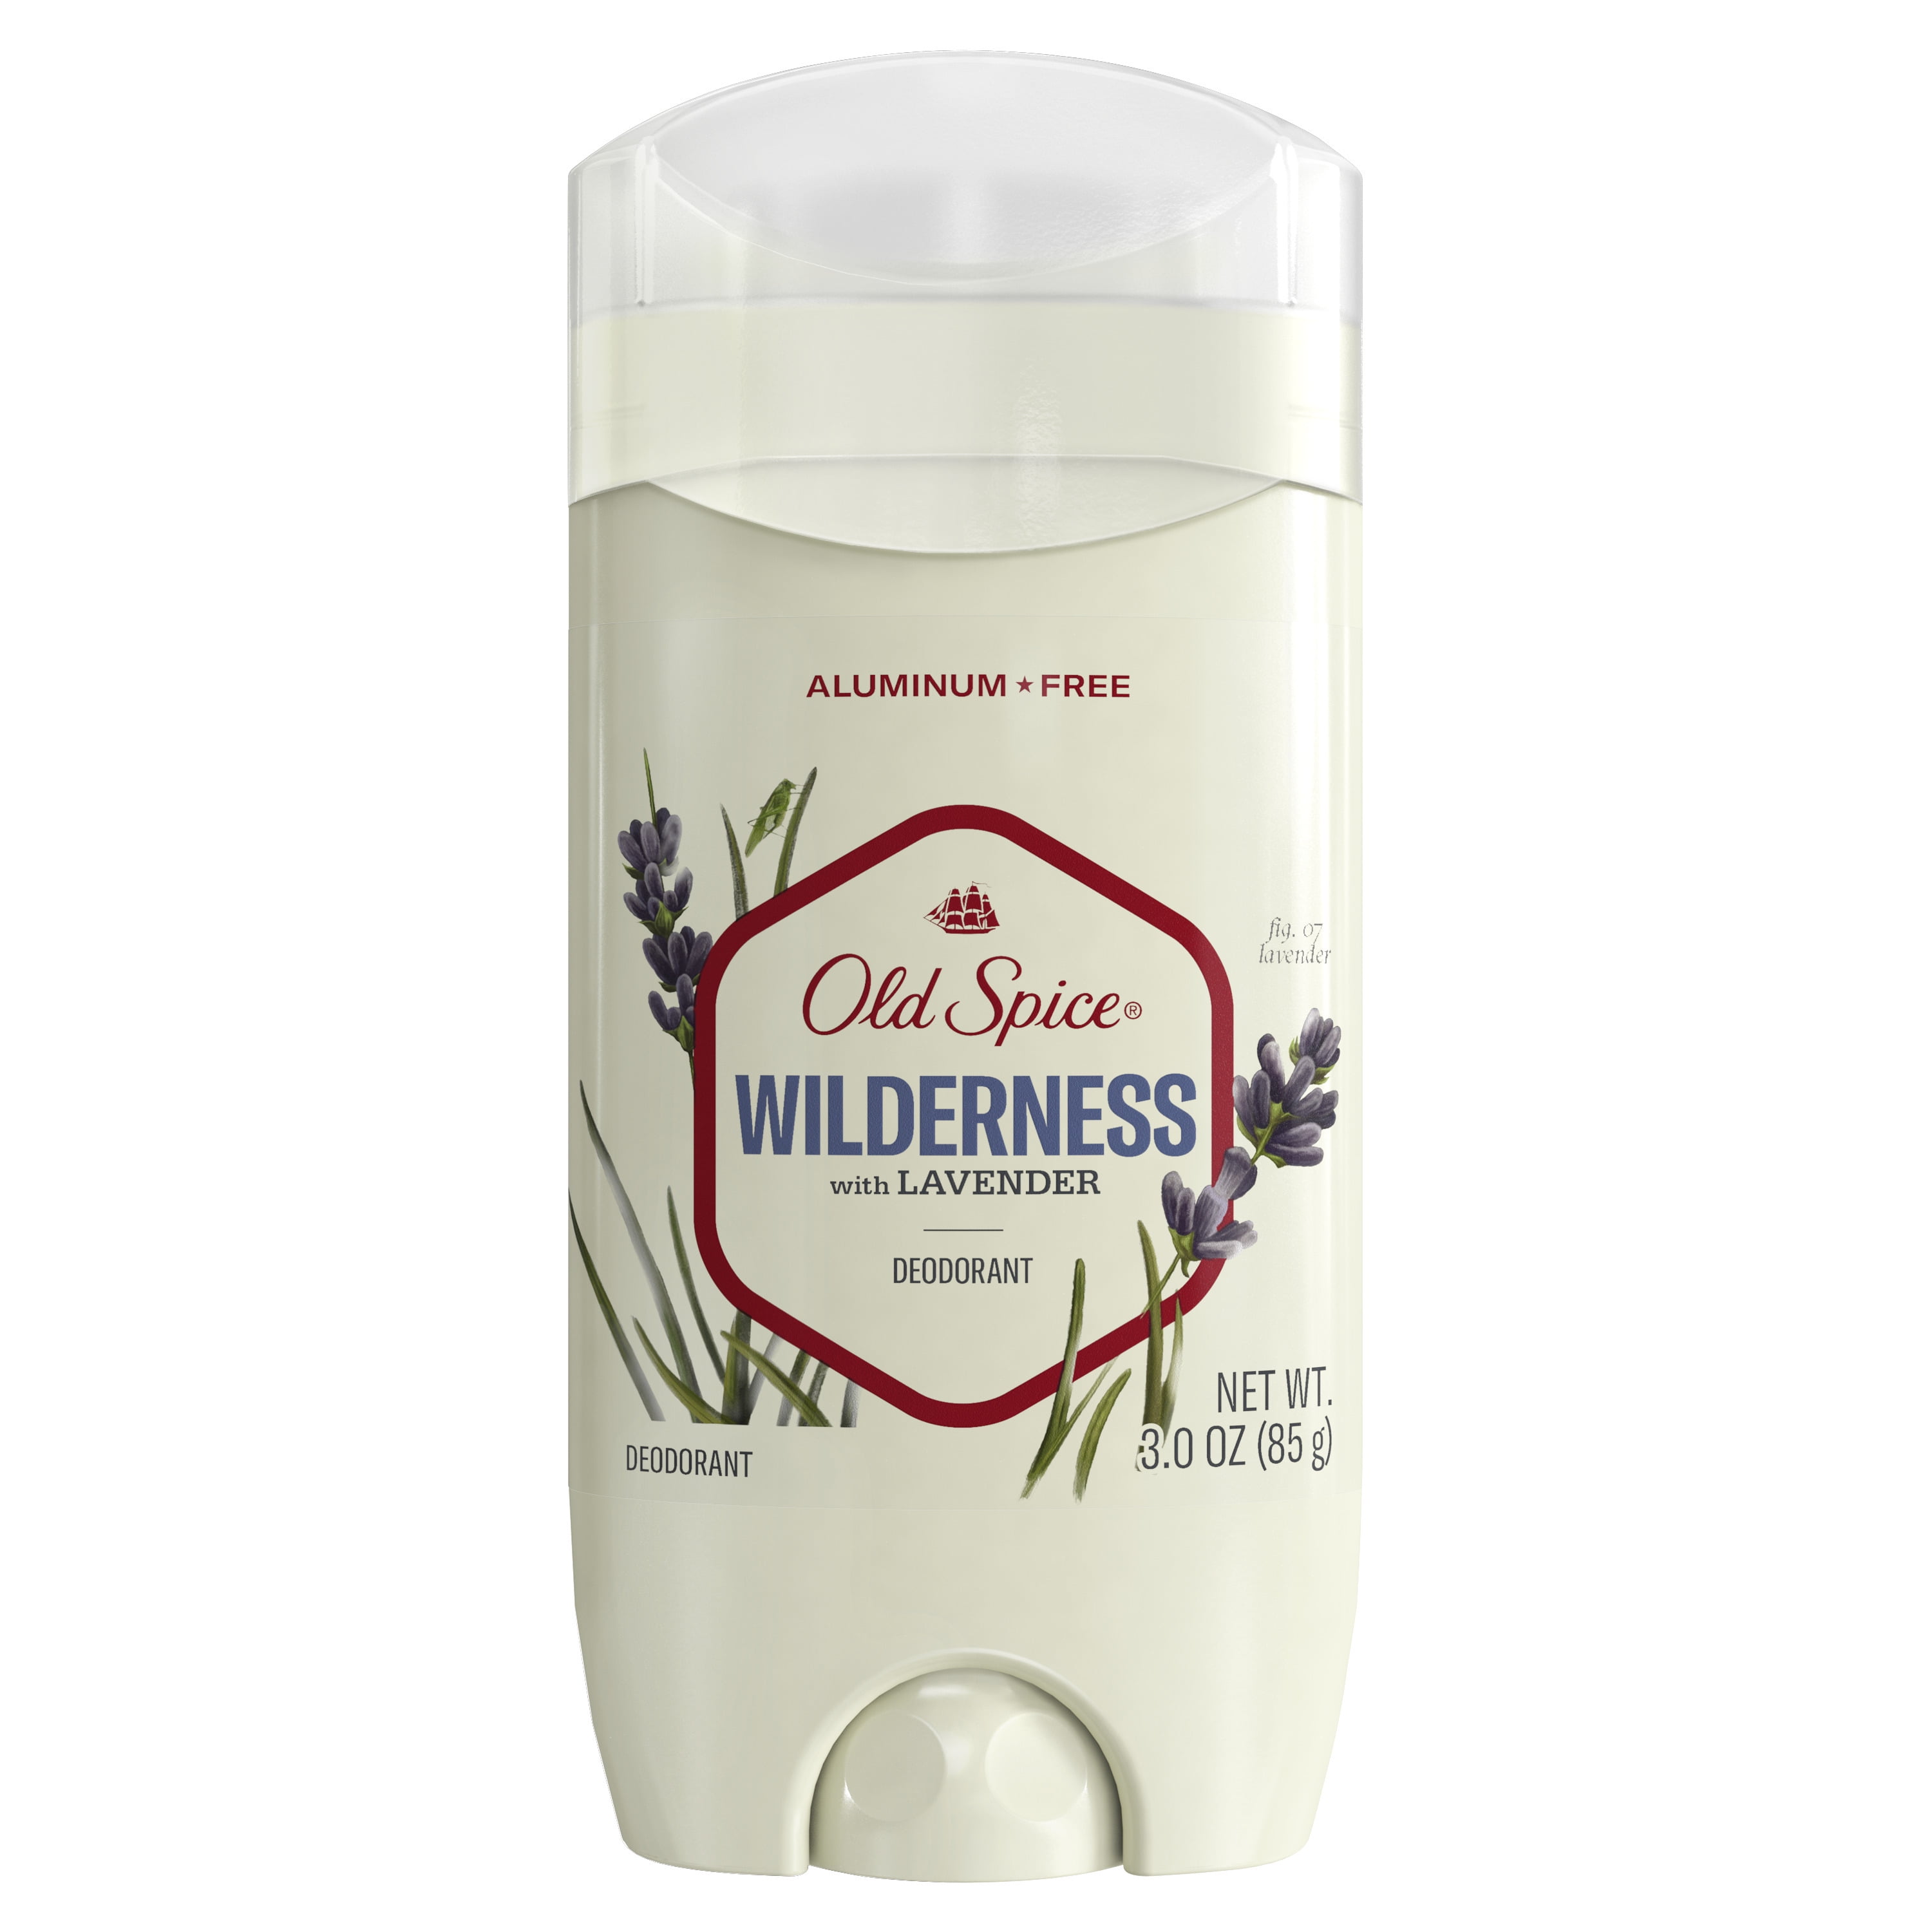 Old Spice Men's Deodorant, Wilderness with Lavender, 3 oz - Walmart.com